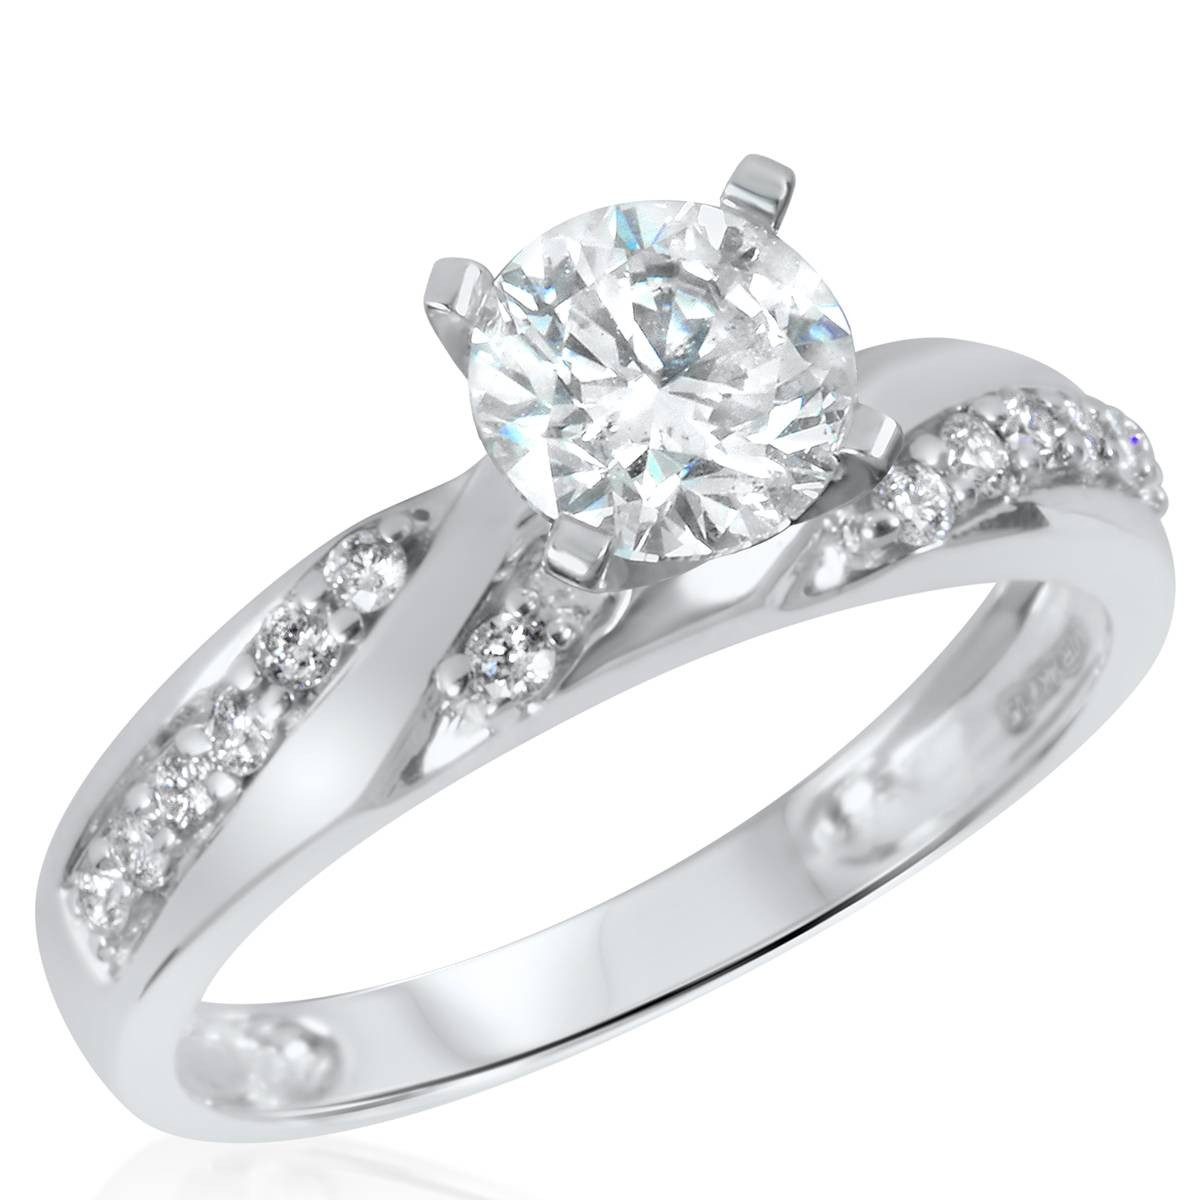 Discount Wedding Ring Sets
 2019 Popular Cheap Diamond Wedding Bands